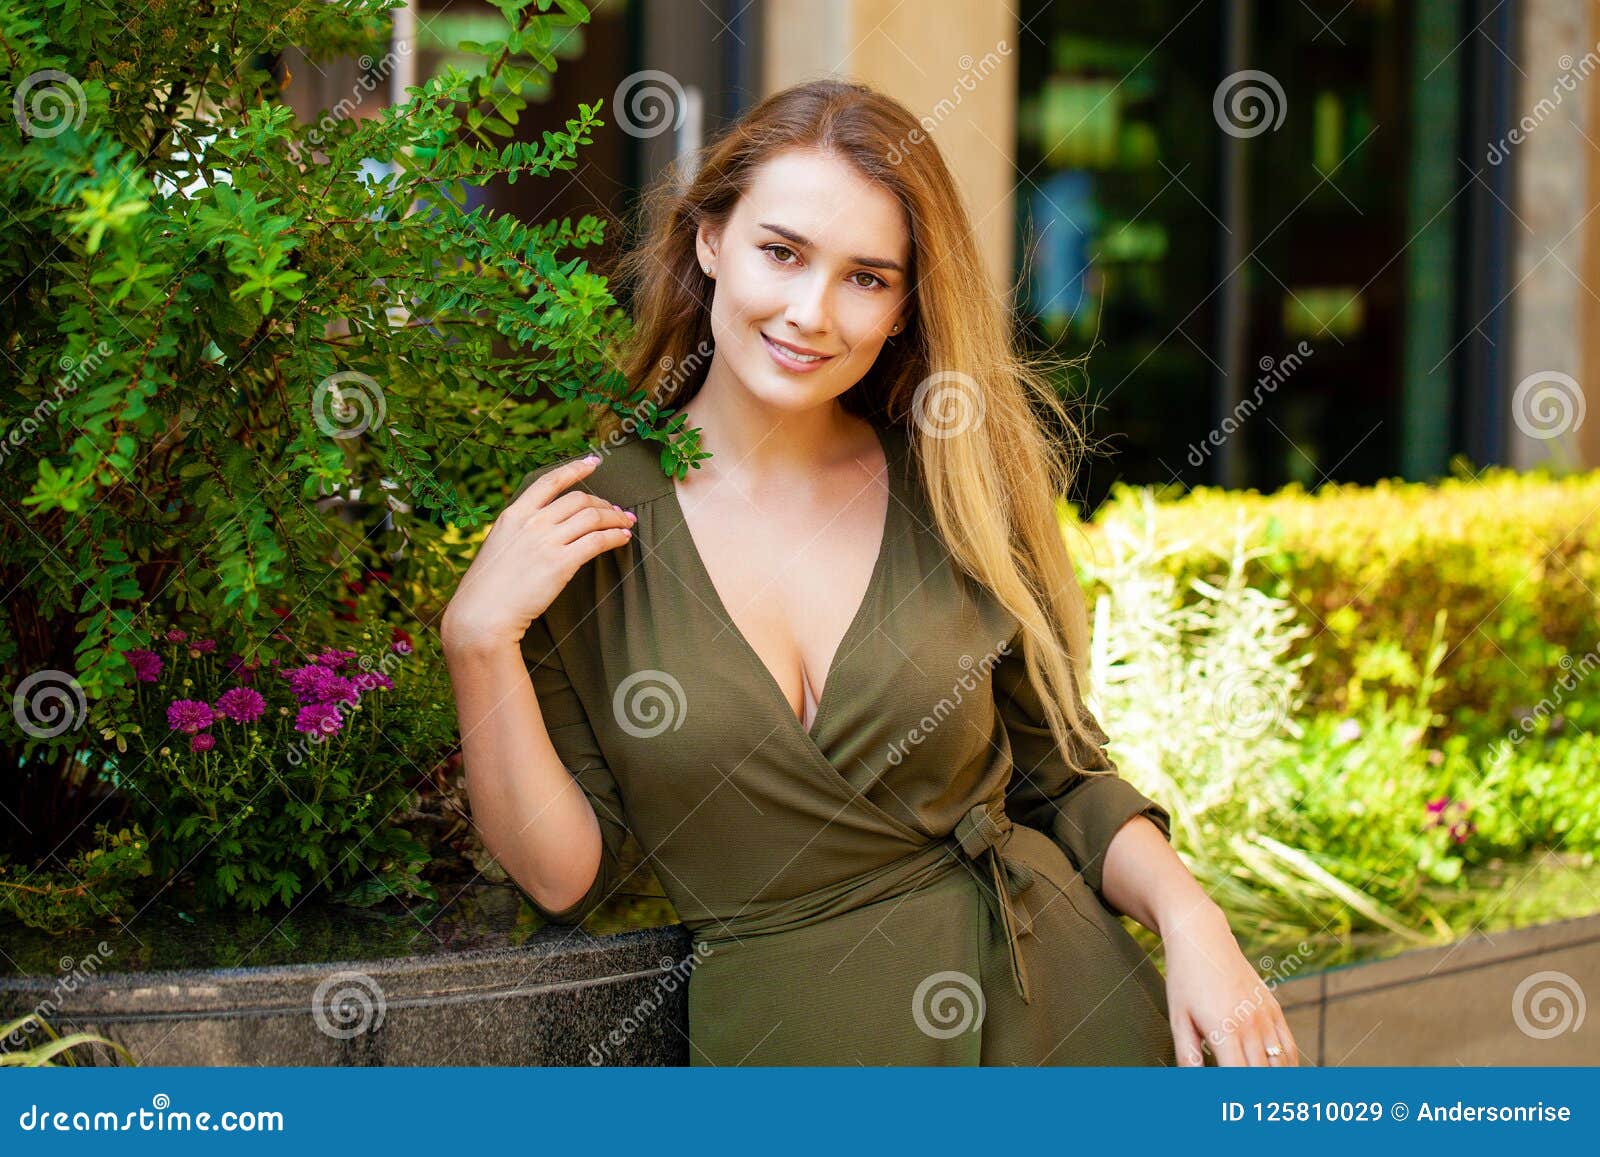 715 Fat Russian Woman Stock Photos